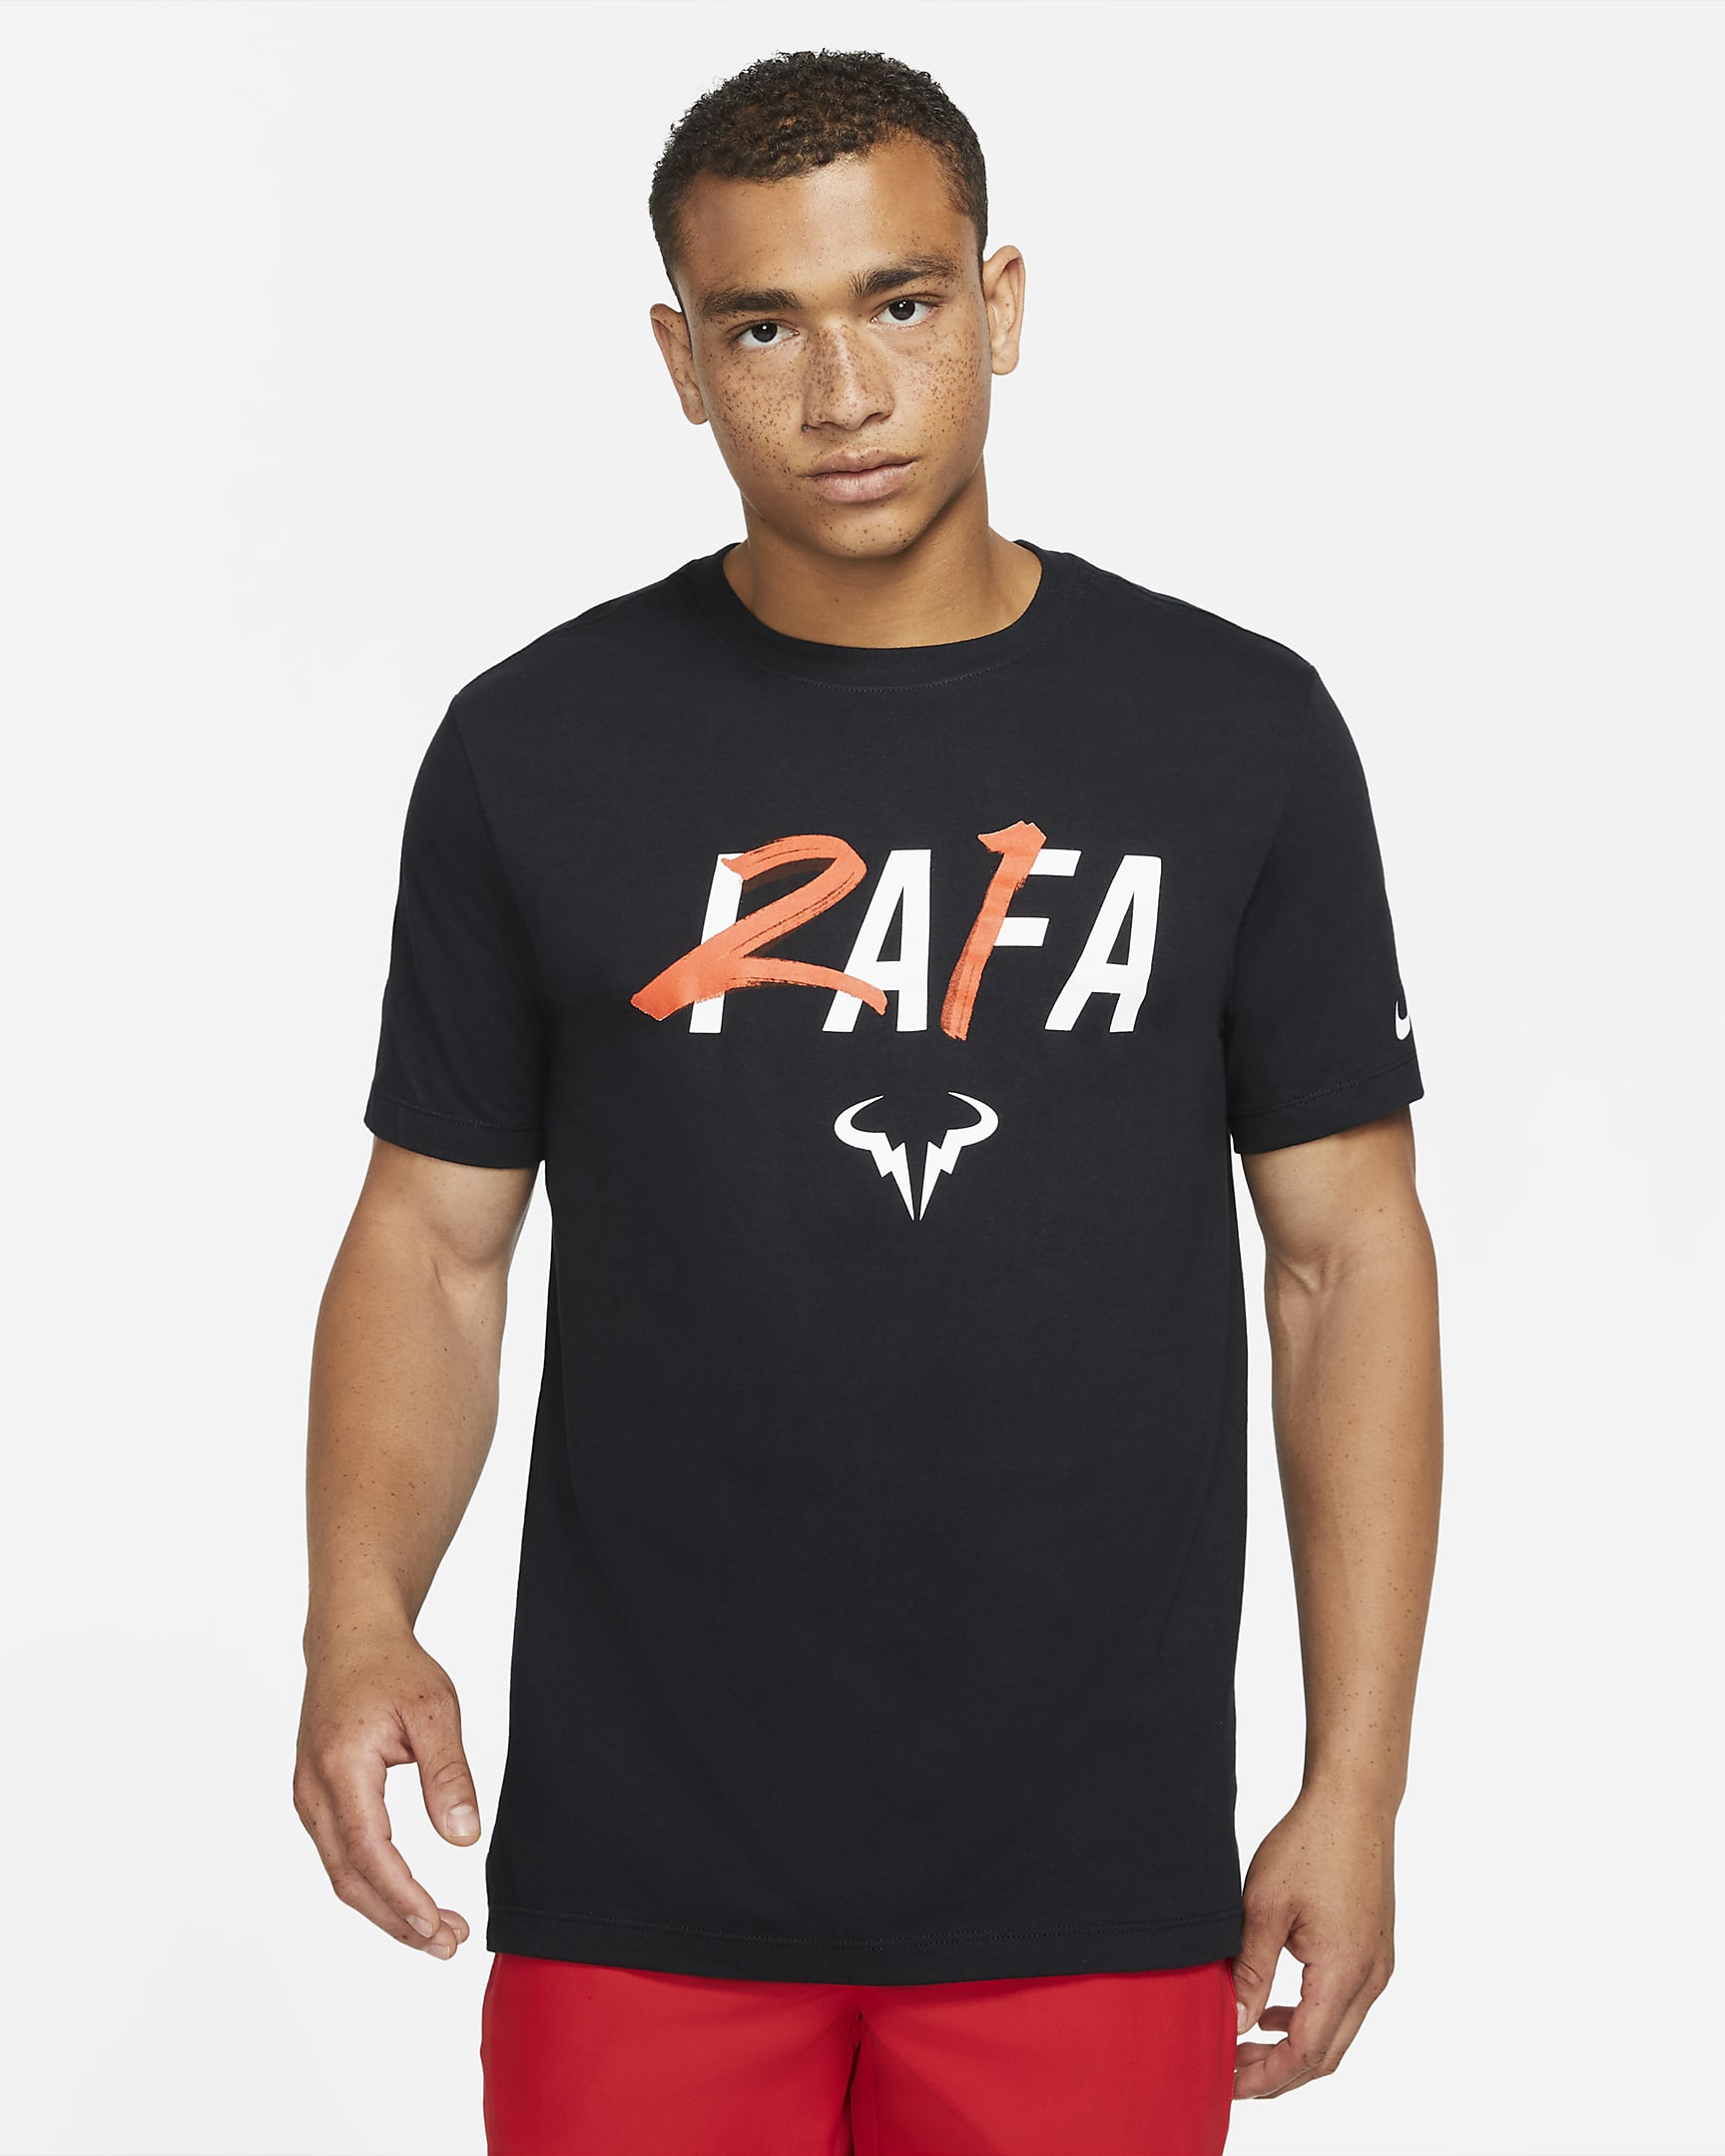 Rafa Winner Men's Tennis T-Shirt - Black